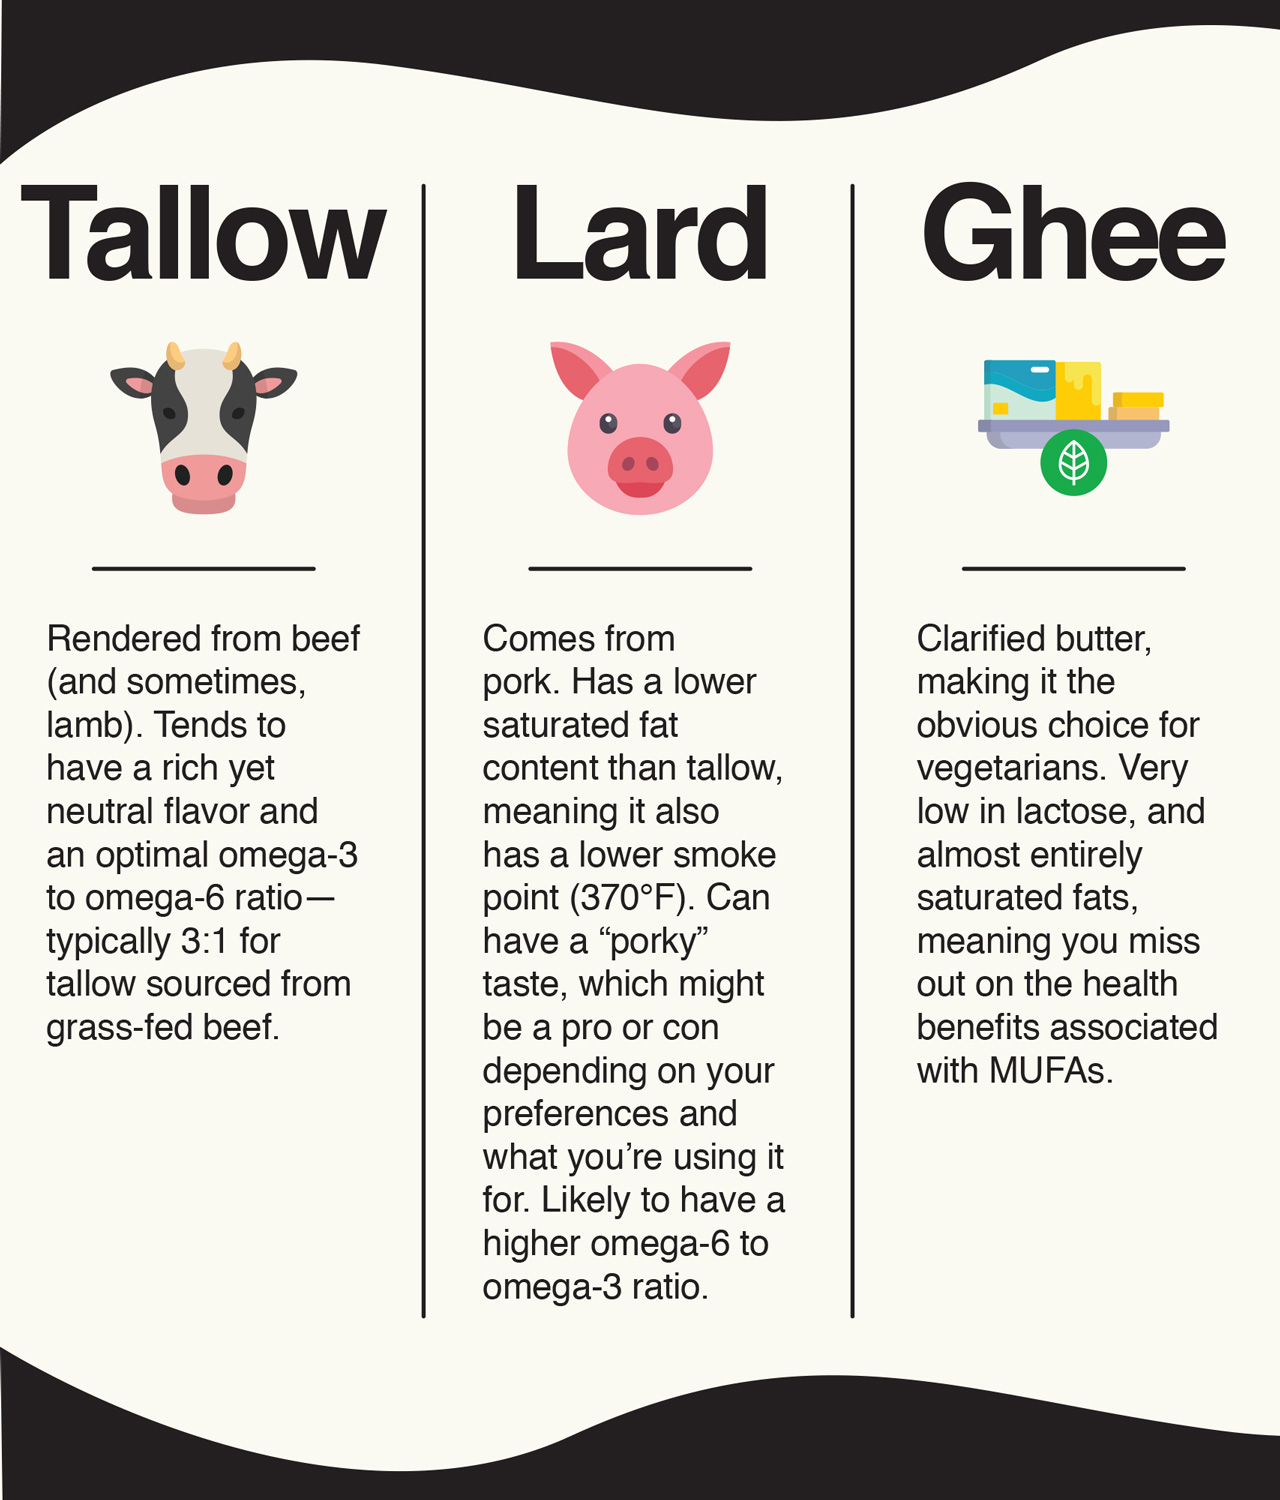 tallow vs lard vs ghee